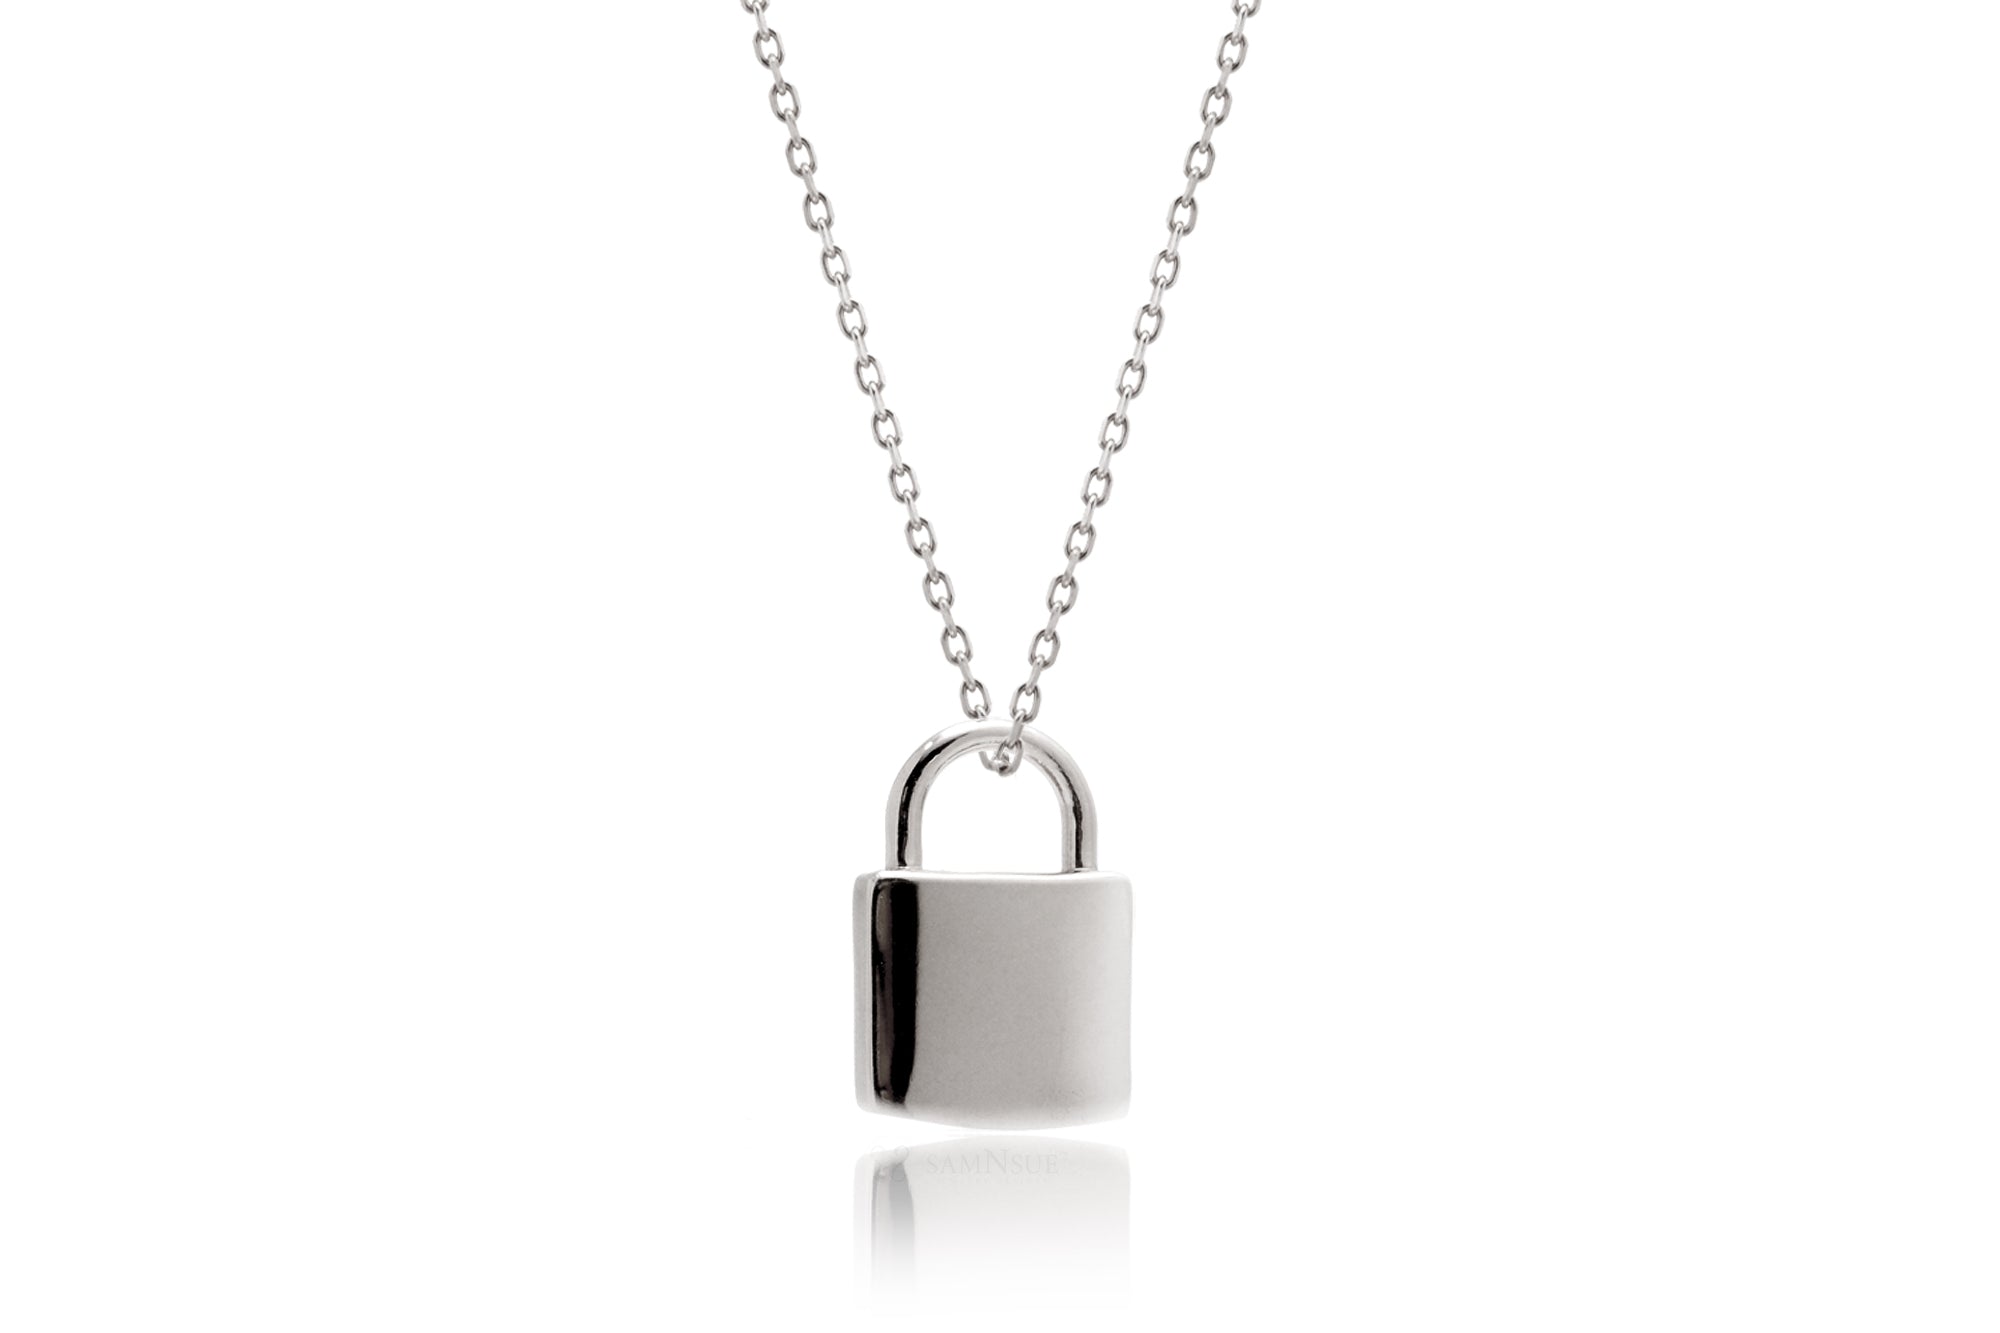 Lock Chain Necklace